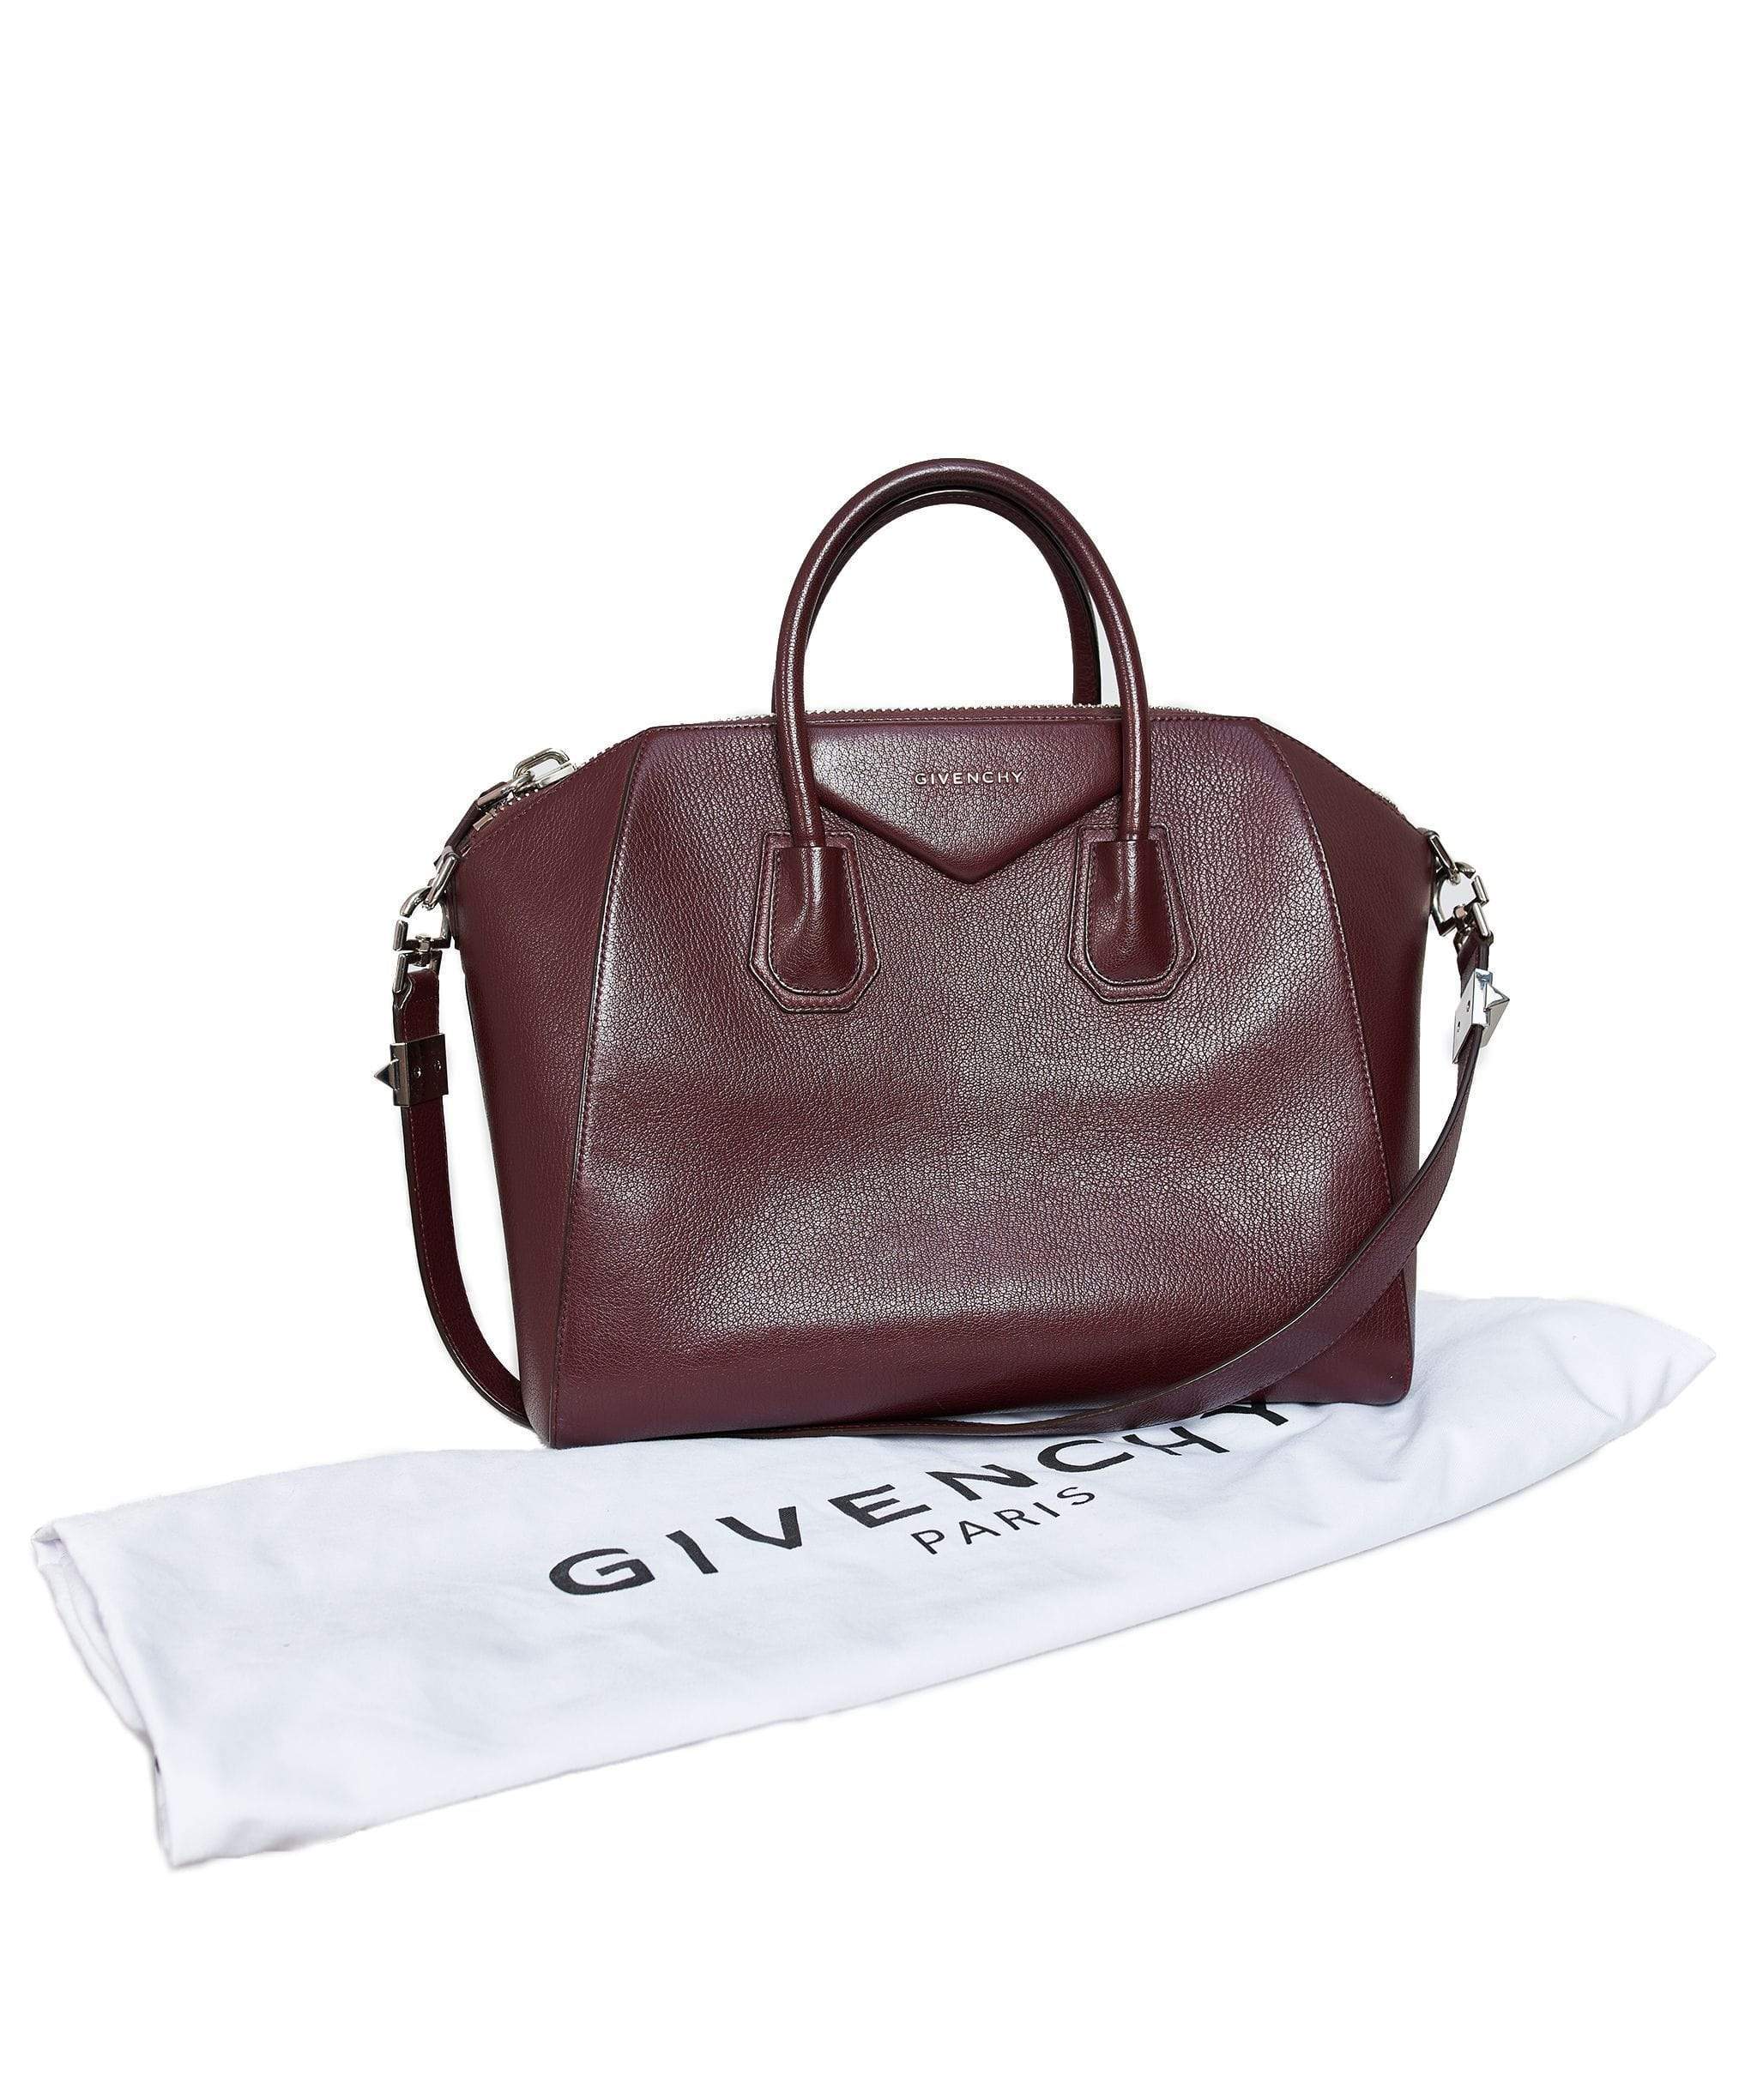 Givenchy Givenchy Antigona Small Bag ASL1089